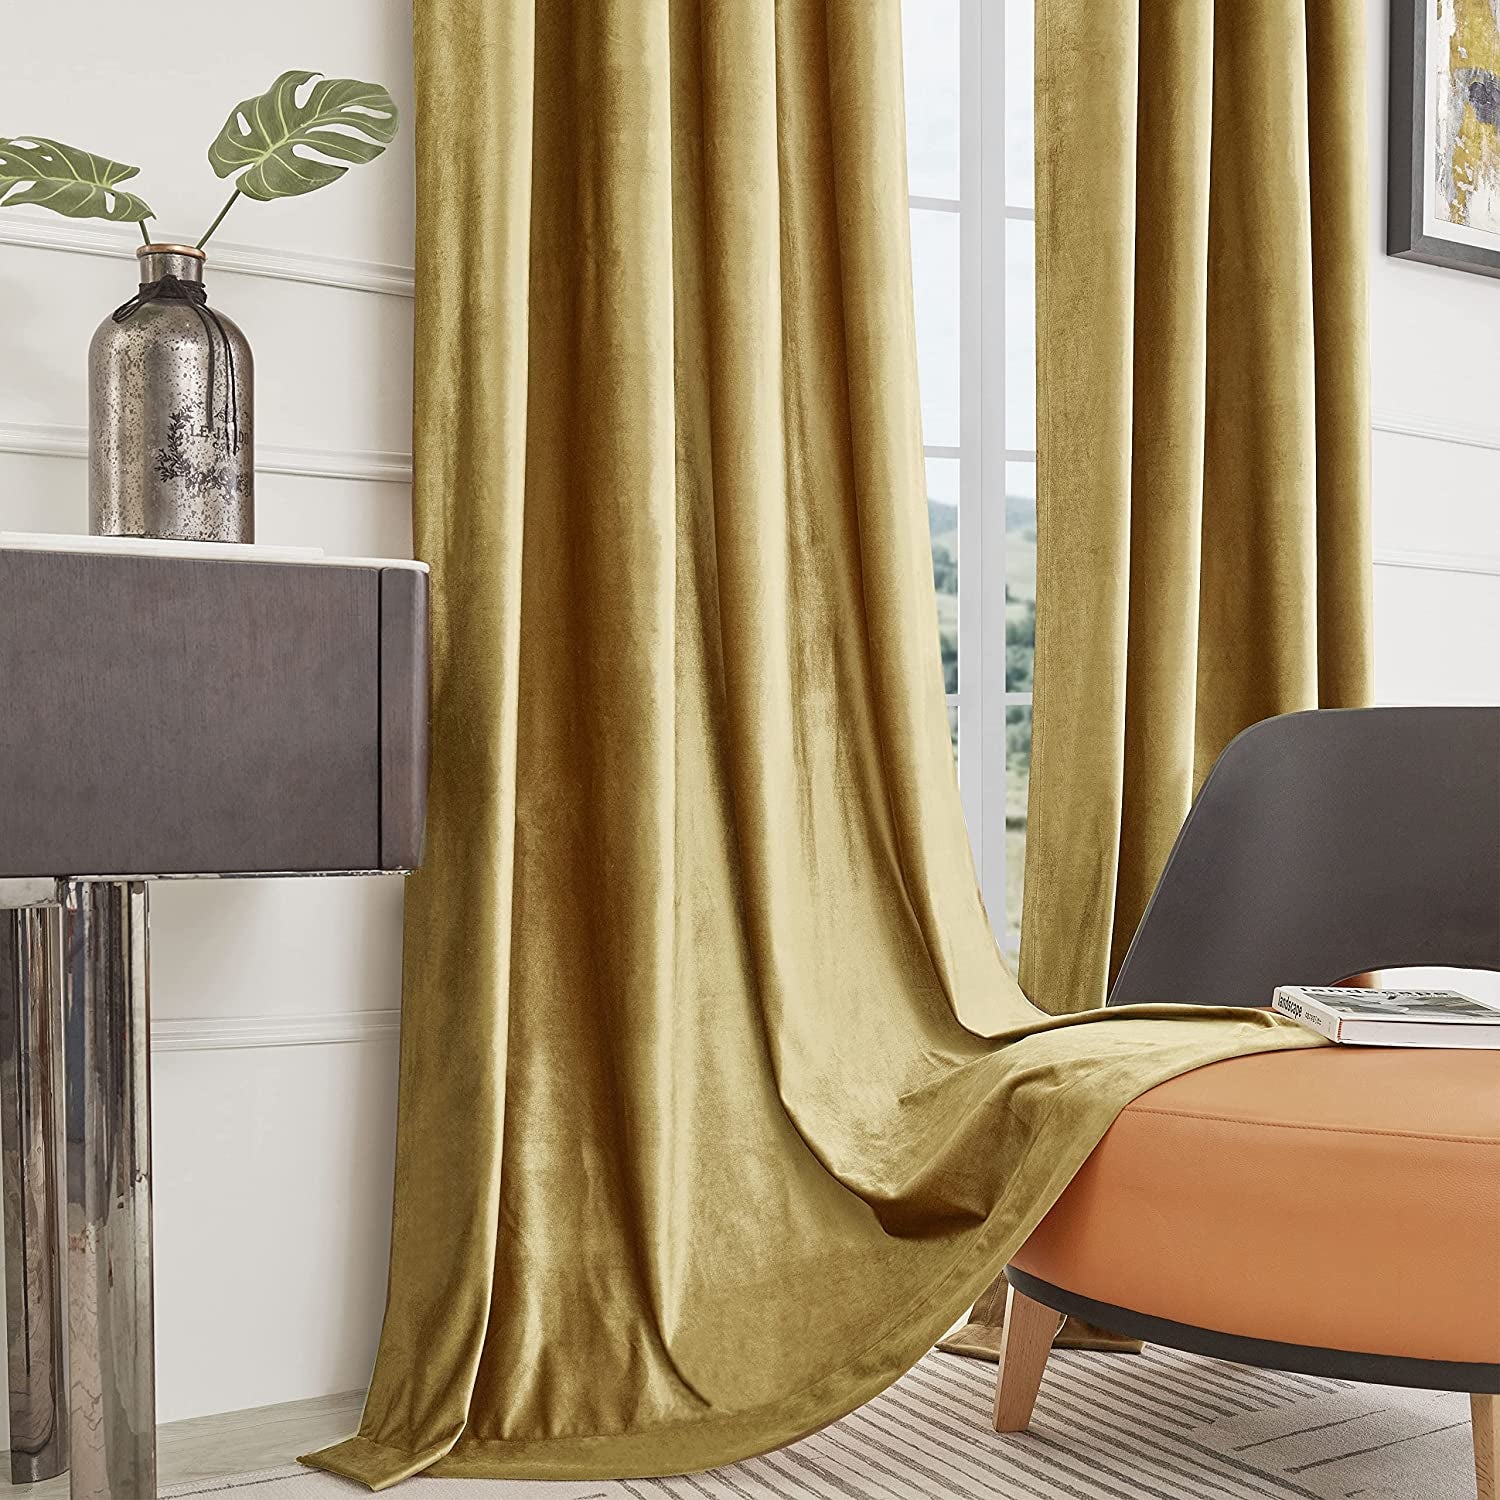 BULBUL Velvet Gold Curtains 84 Inch Length- Living Room Blackout Thermal Window Drapes Darkening Decor Grommet Curtains for Bedroom Set of 2 Panels  BULBUL   